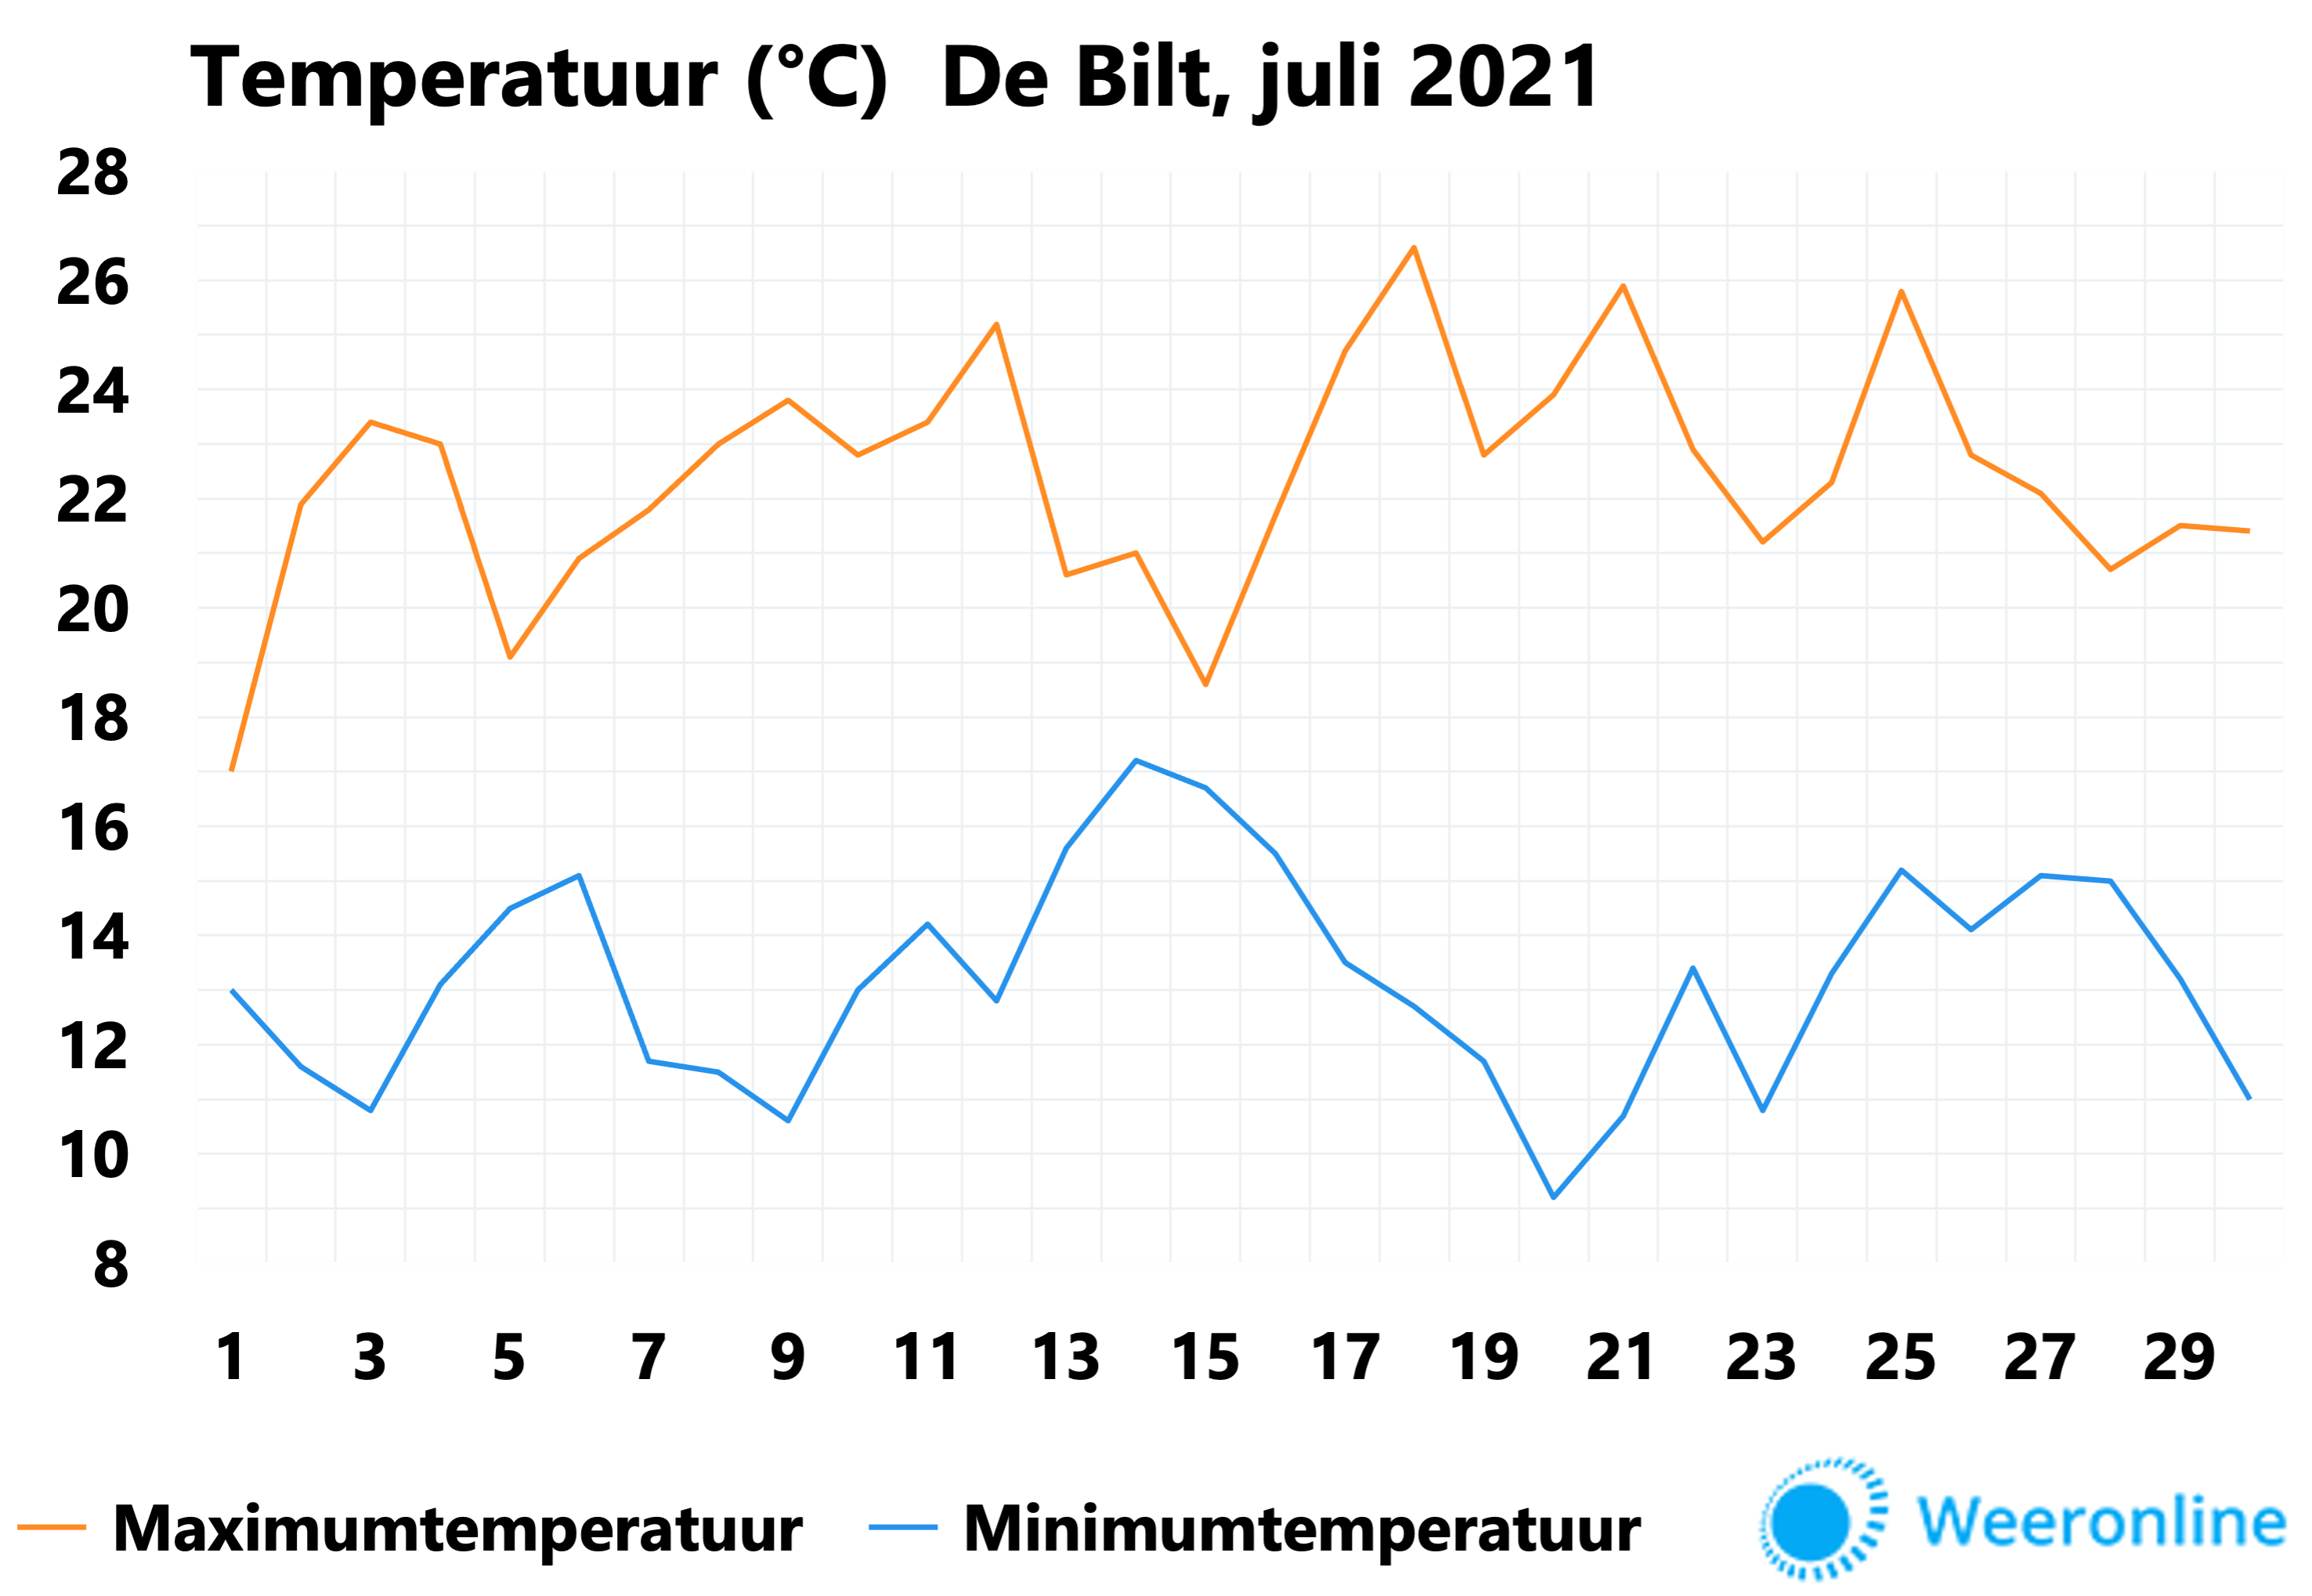 Temperatuur De Bilt juli 2021 definitief